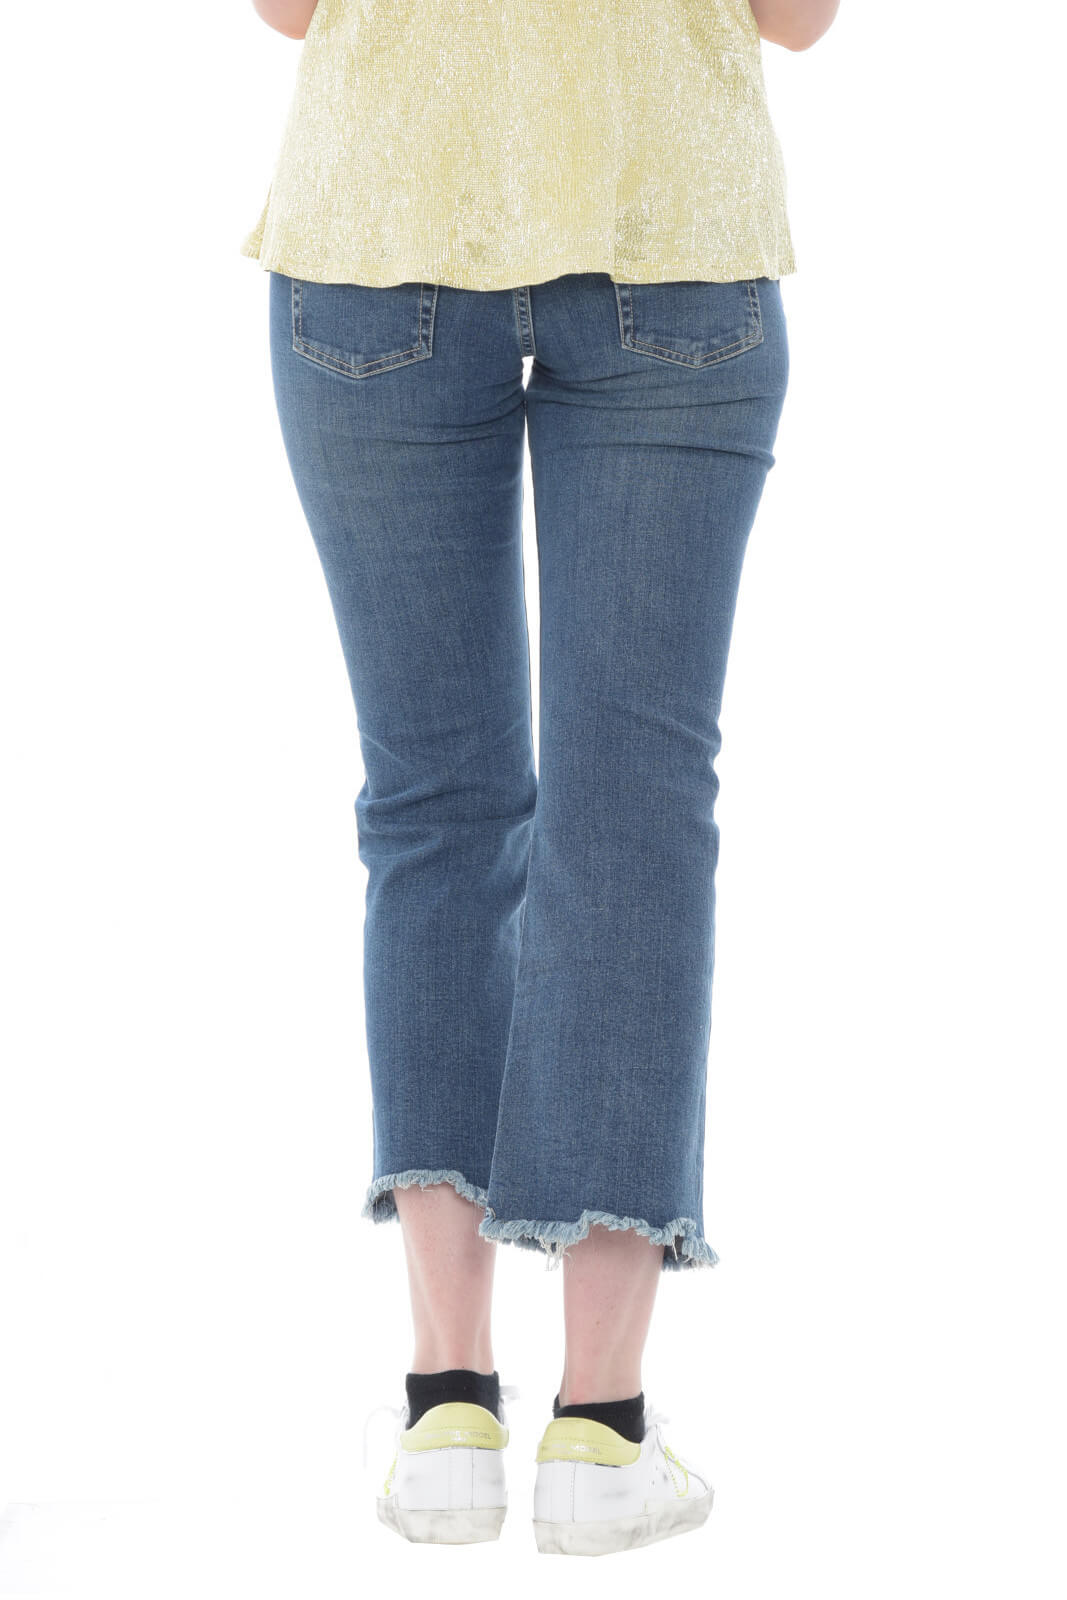 Souvenir Women's Jeans with raw cut bottom